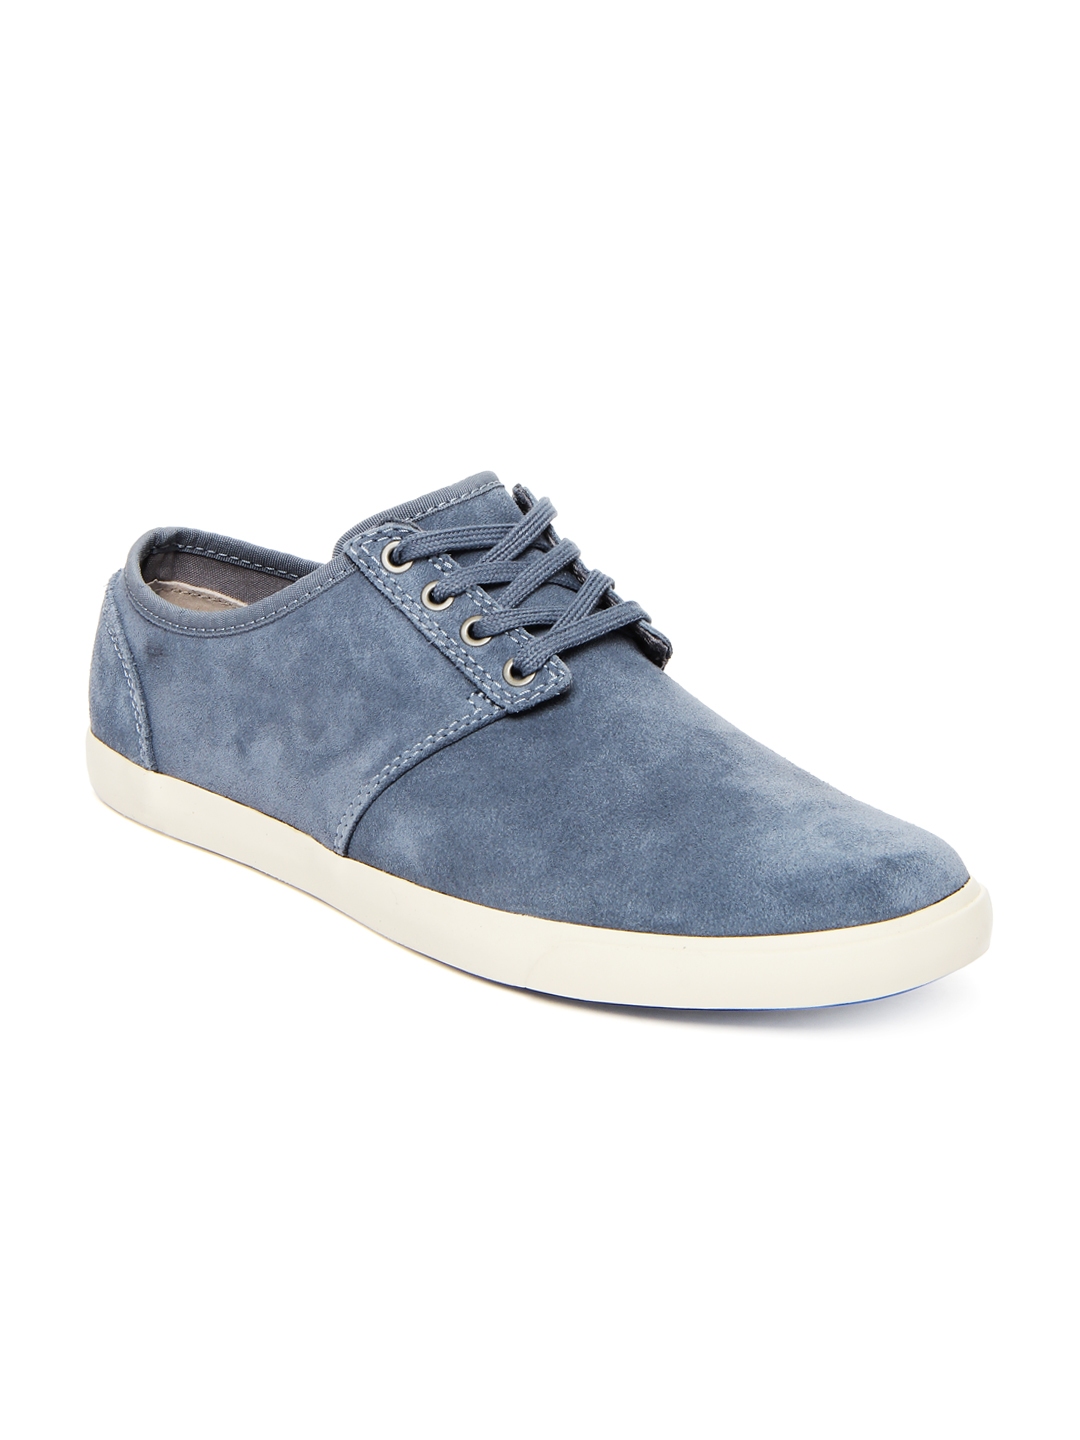 Buy Clarks Men Blue Suede Casual Shoes - Casual Shoes for Men 257340 ...